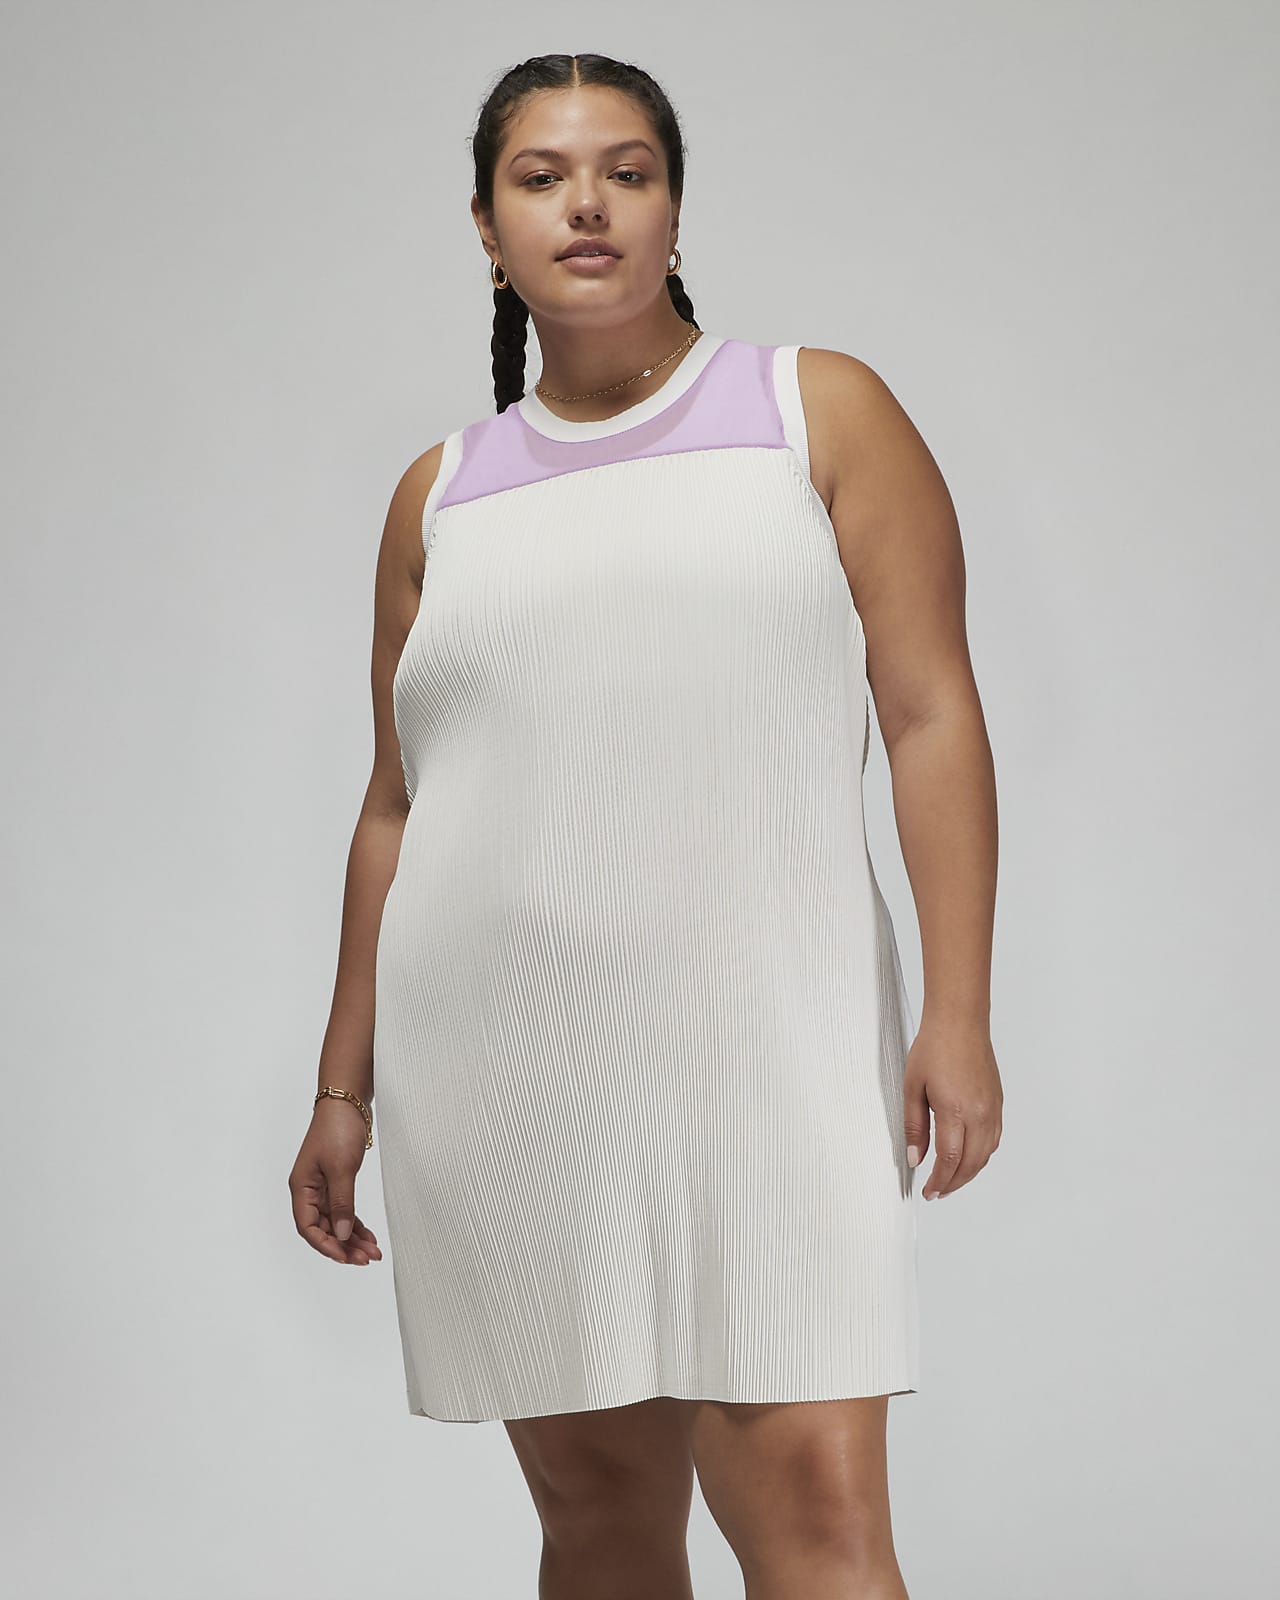 Restaurar empeñar Anécdota Jordan 23 Engineered Women's Dress (Plus Size). Nike.com